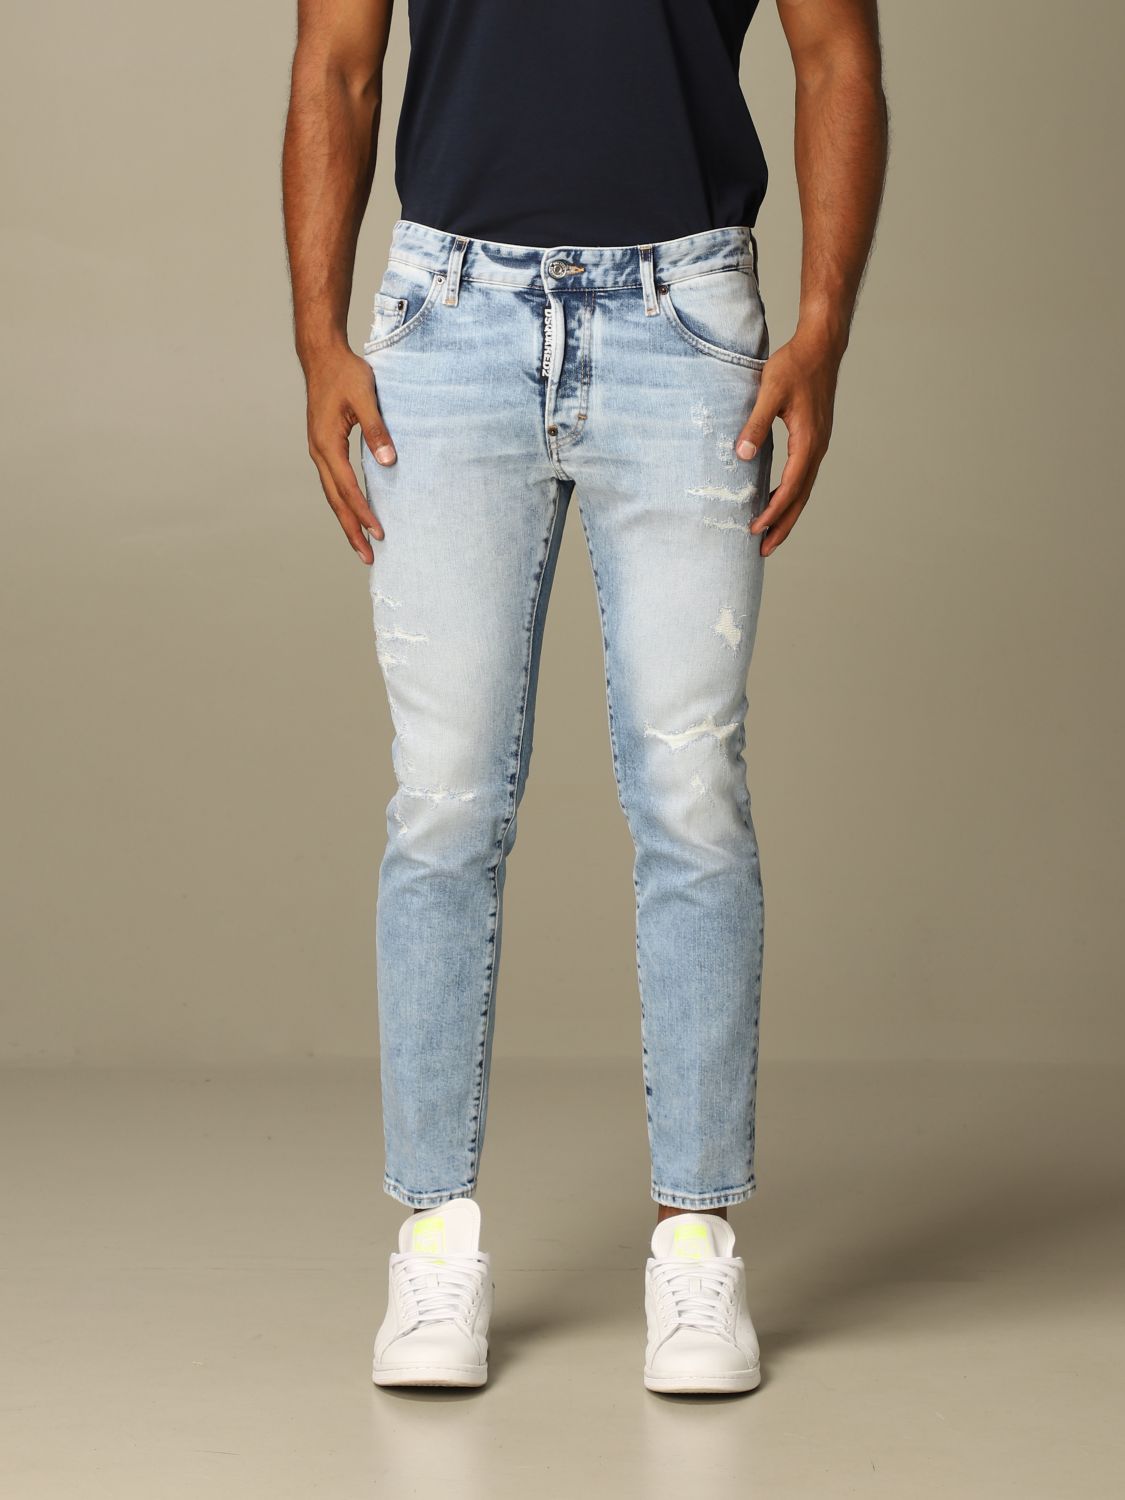 jeans dsquared uomo 2016